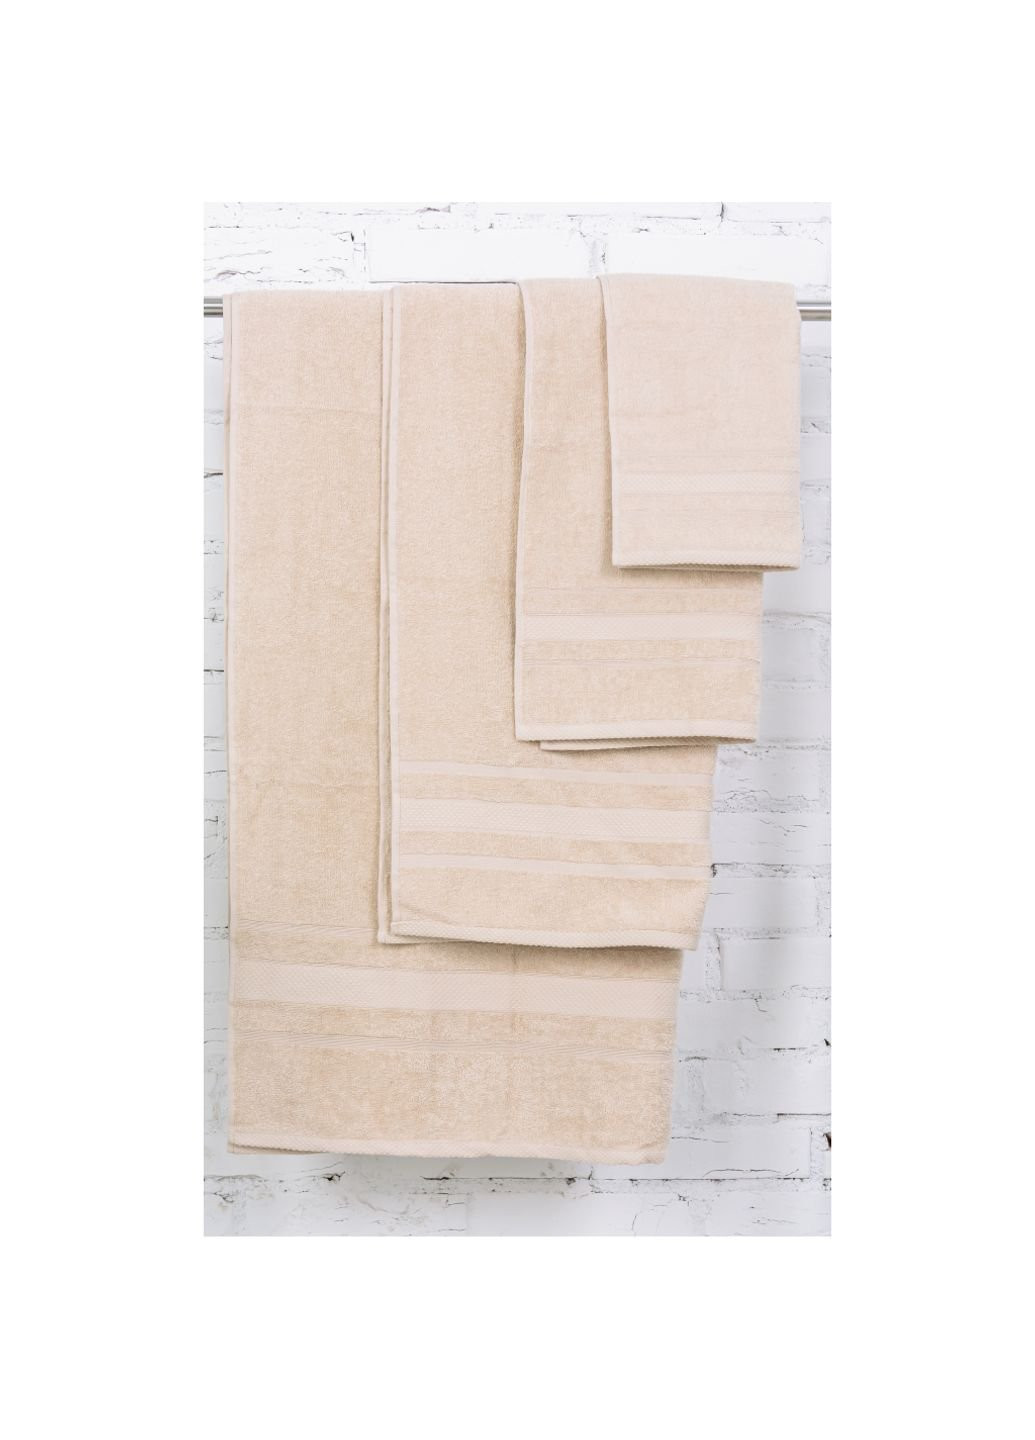 Mirson полотенце набор банных №5084 elite softness beige 40х70, 50х90, 70х140 (2200003183542) бежевый производство - Украина